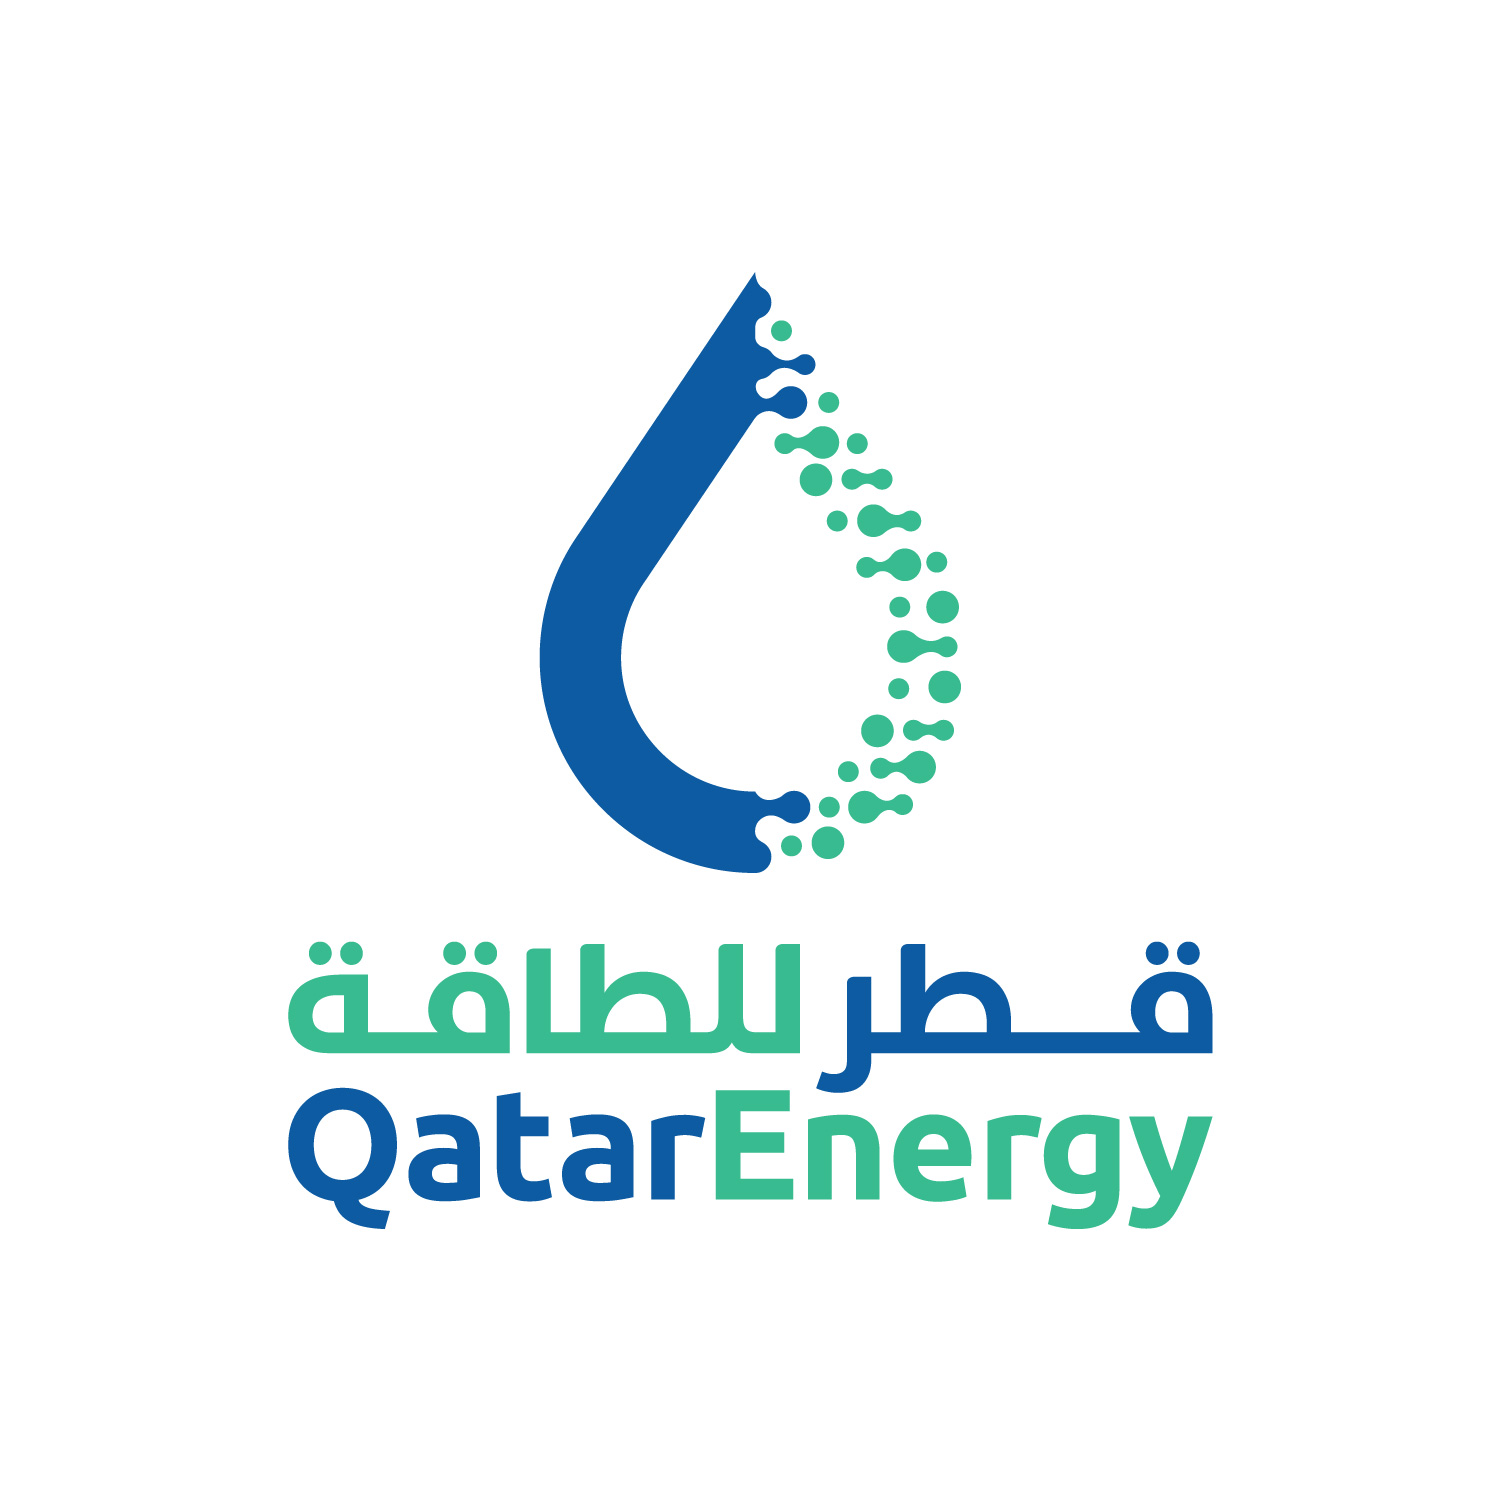 Qatar Petroleum changes name to Qatar Energy signalling new strategy